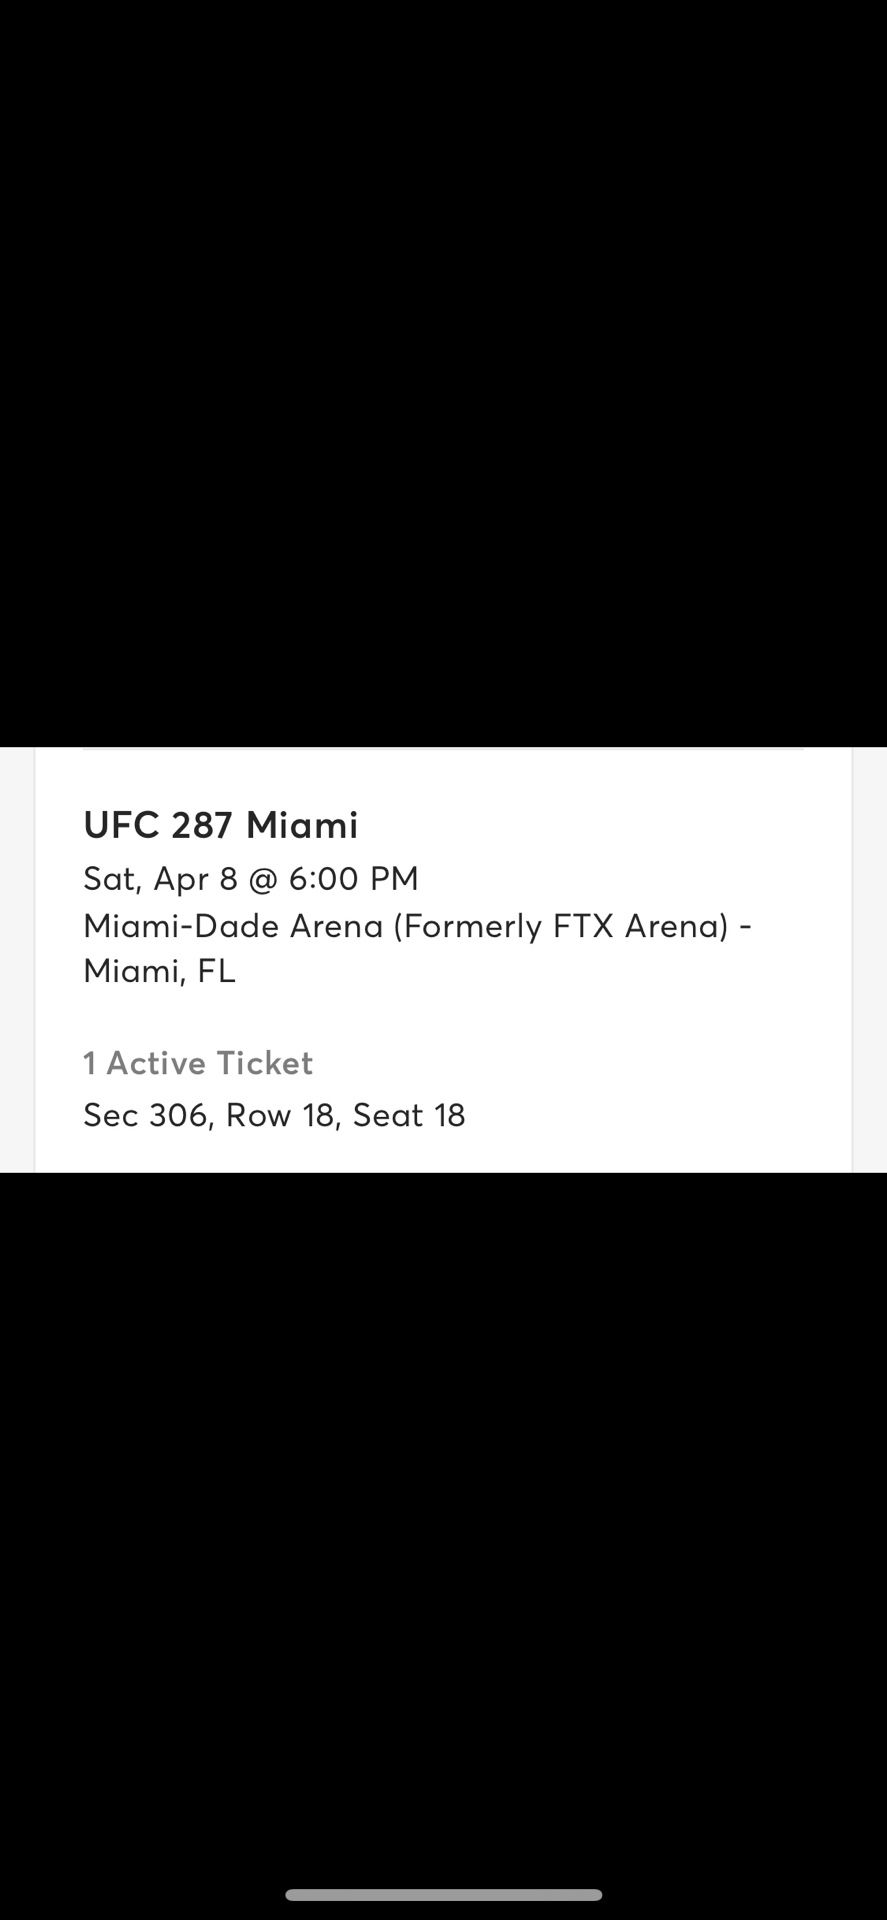 UFC 287 - One Ticket - April 8th in Miami